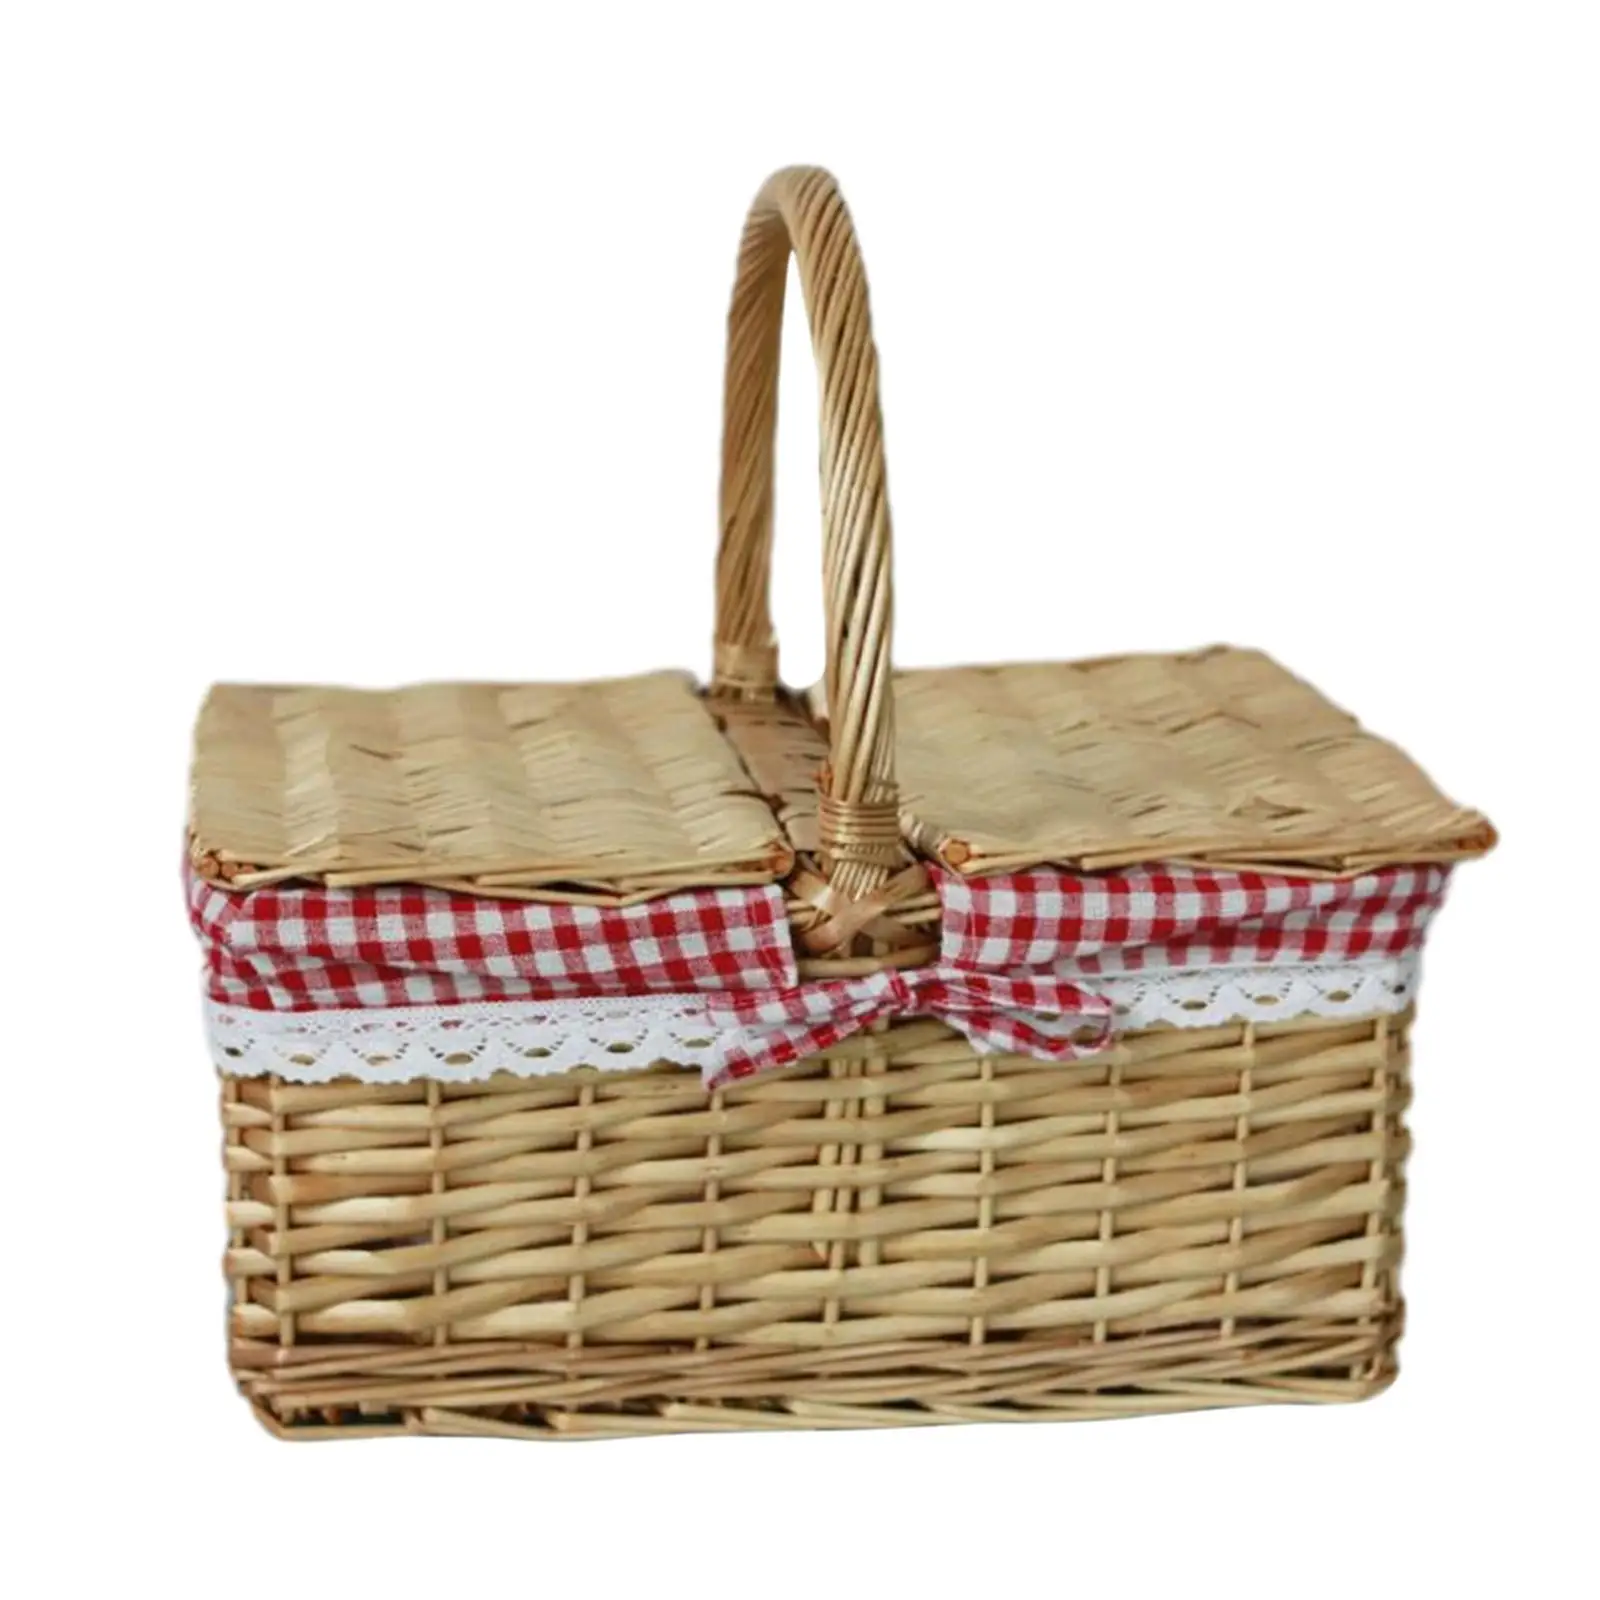 Wicker Picnic Basket Rattan Storage Serving Basket with Washable Plaids Liner Wicker Woven Basket for Park Outdoor Vegetables